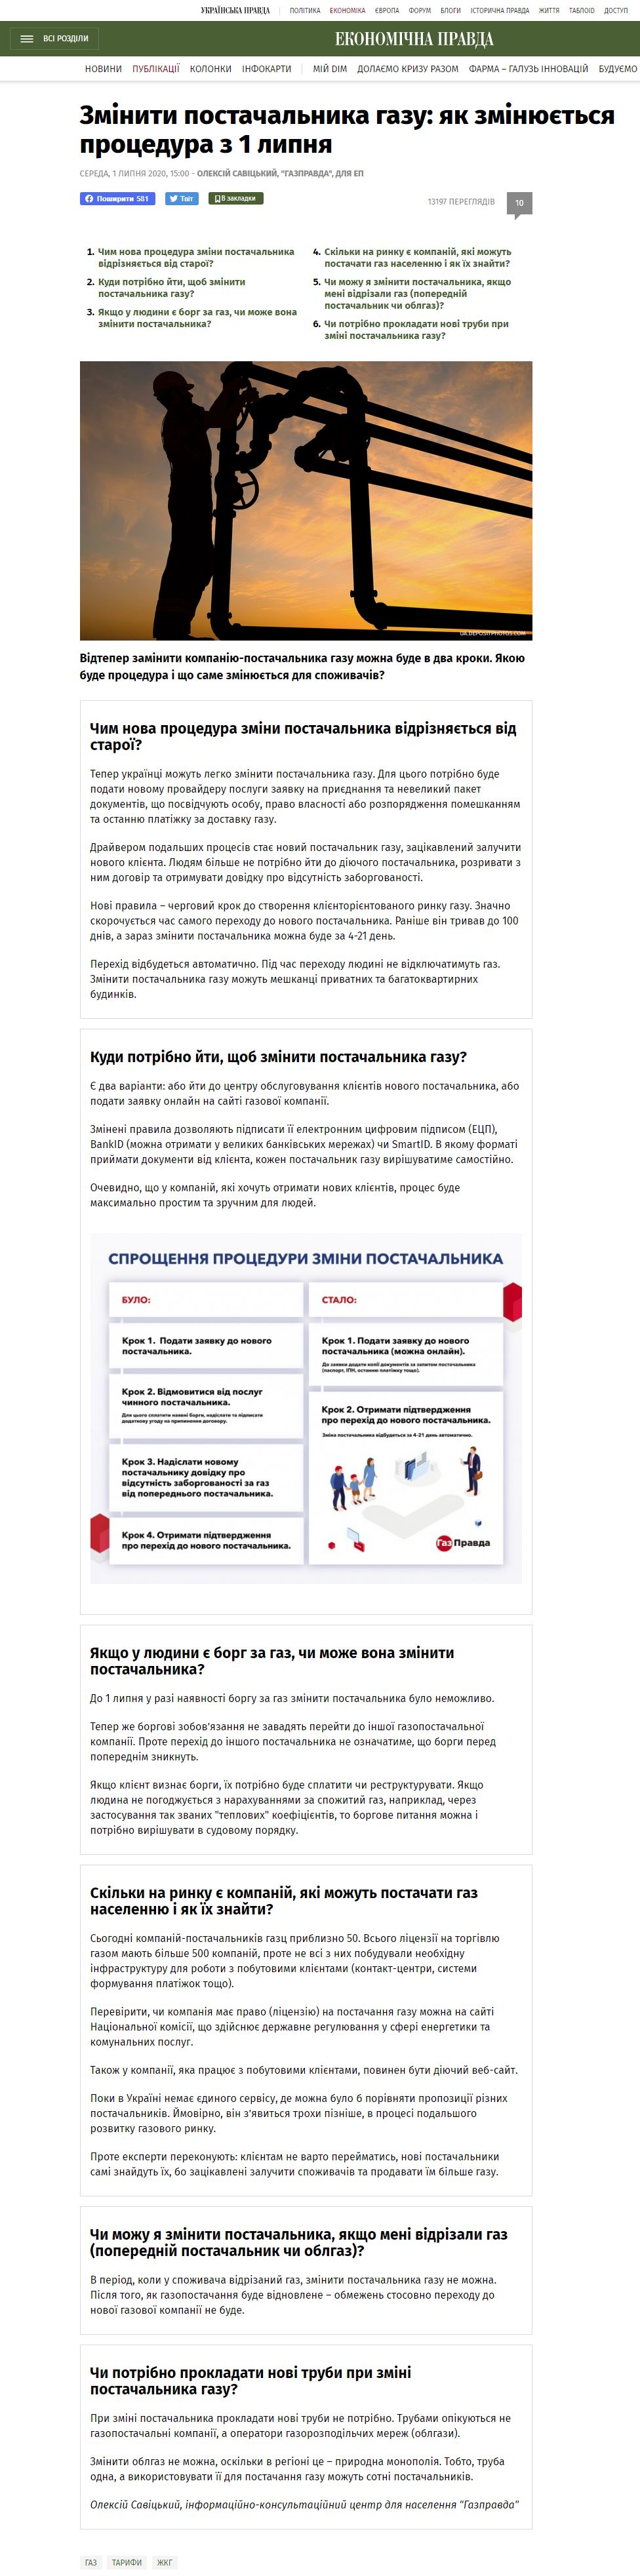 https://www.epravda.com.ua/publications/2020/07/1/662450/